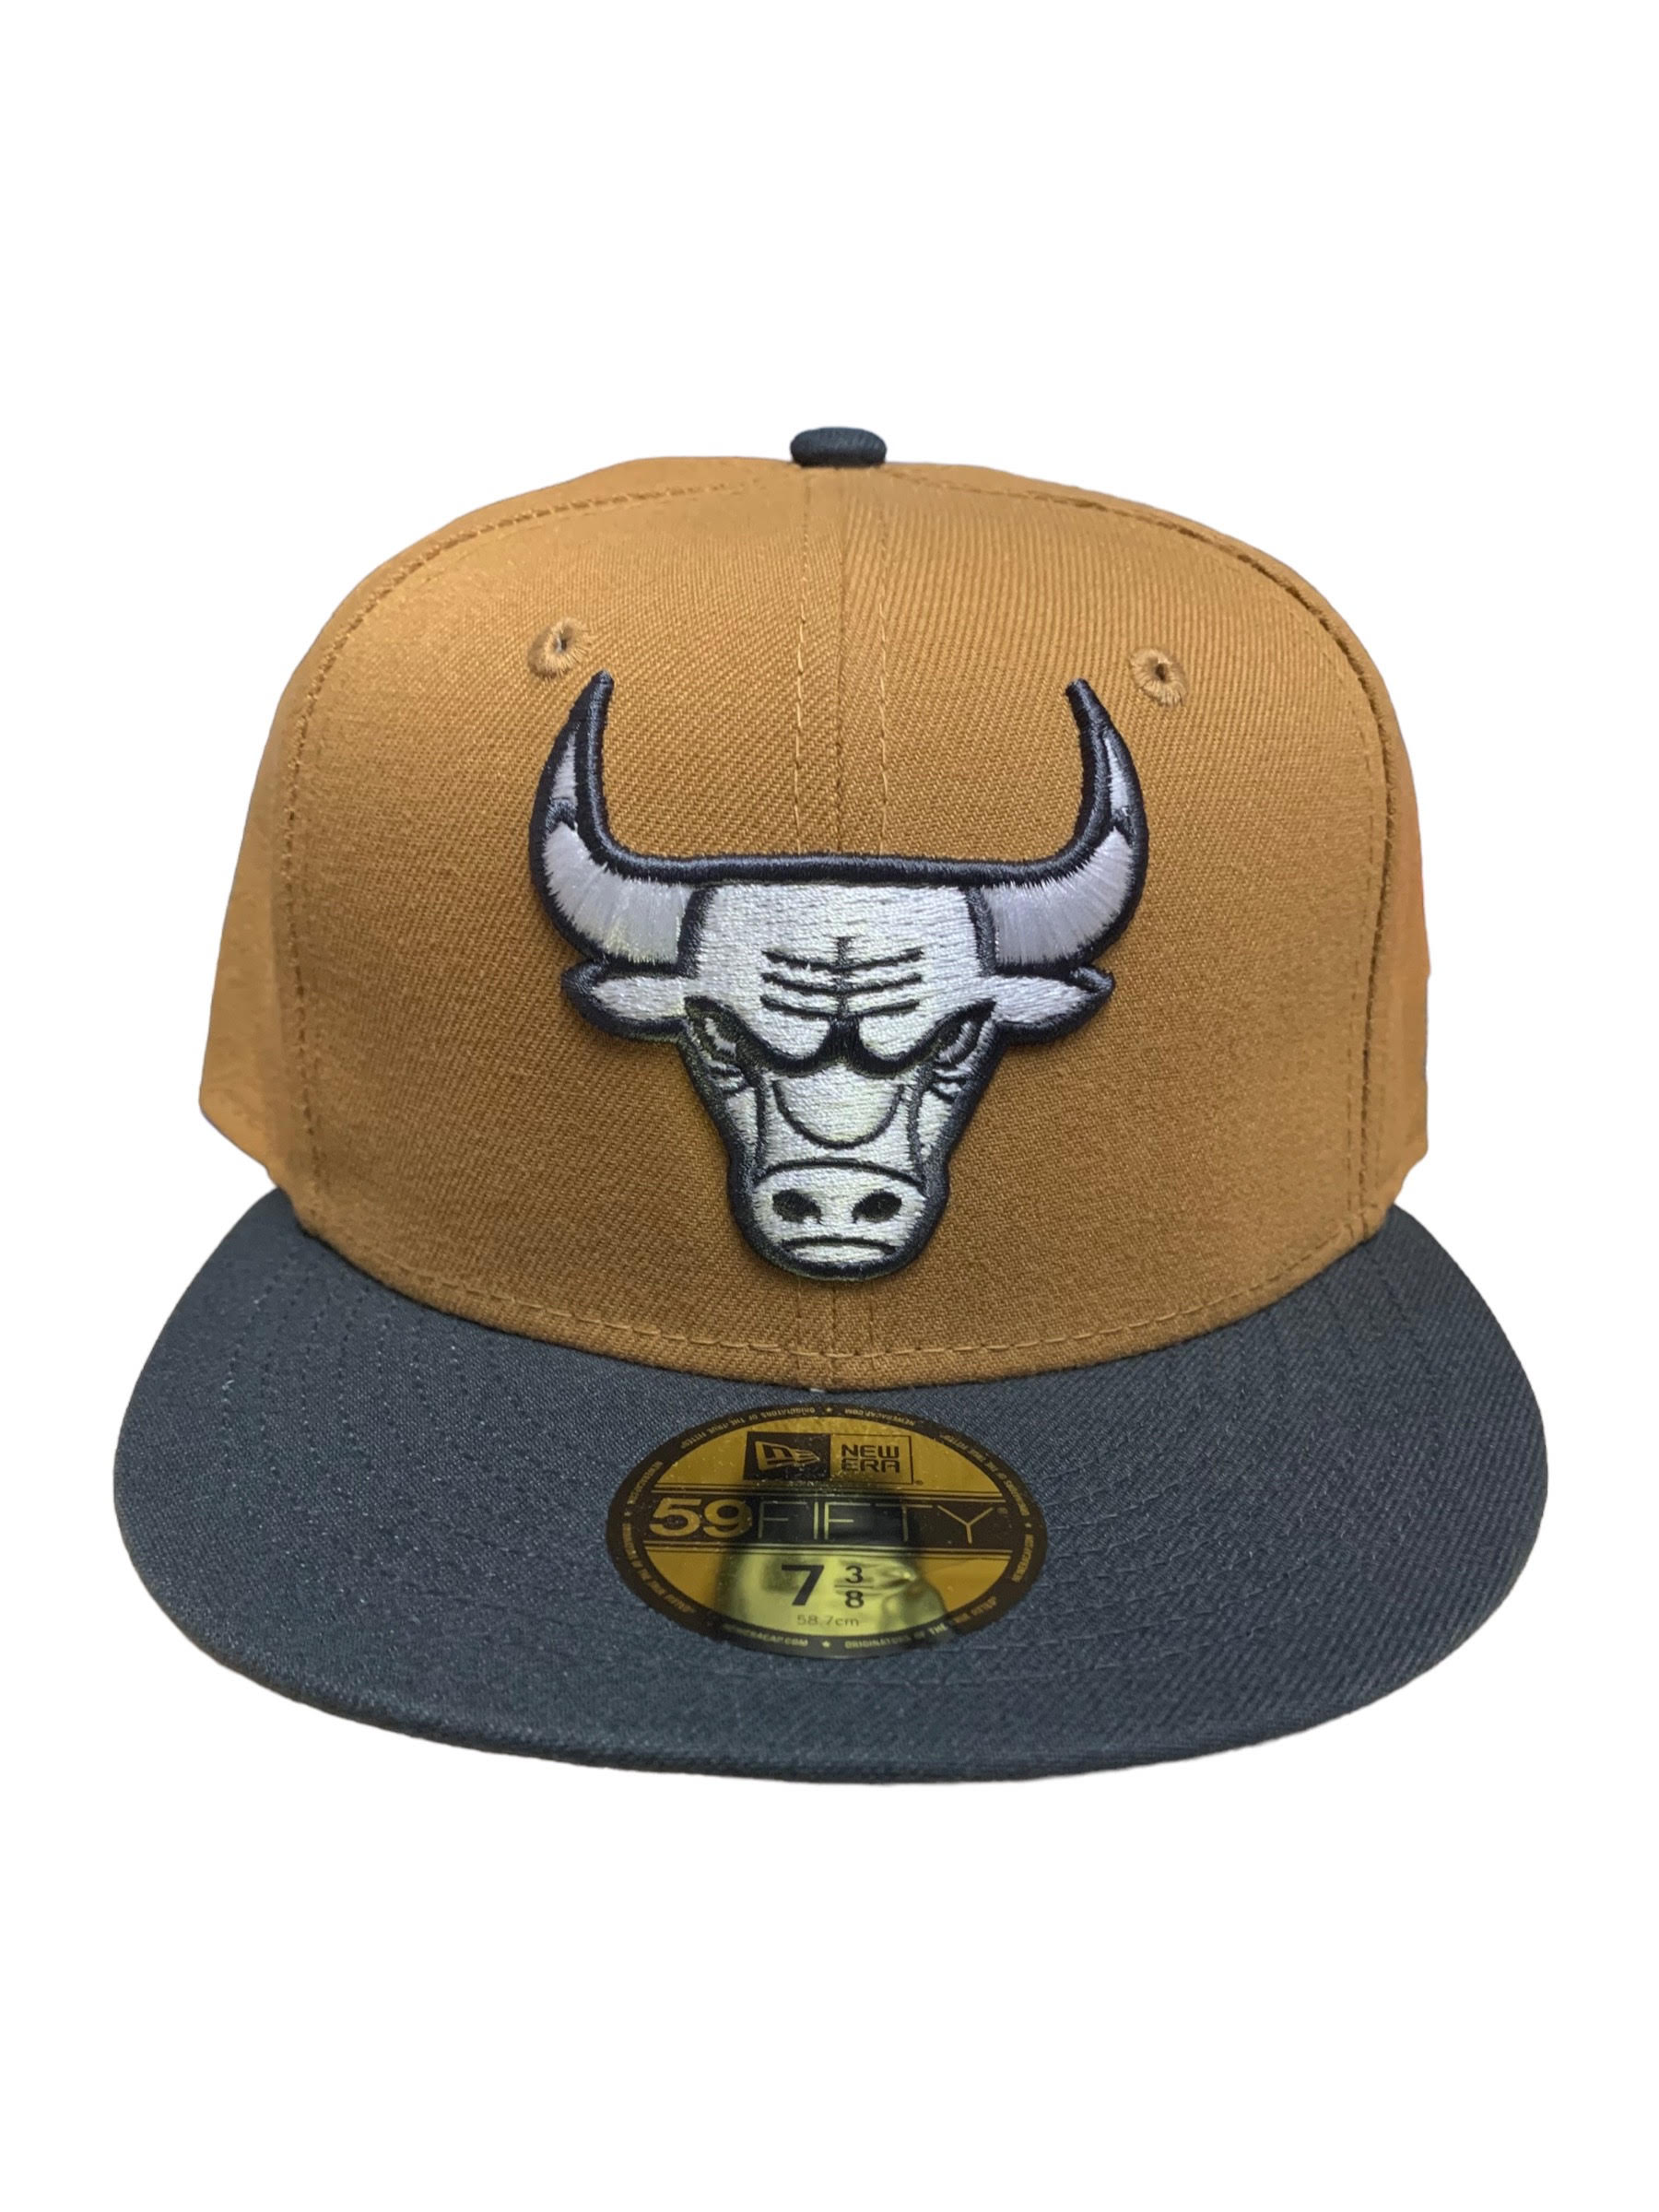 chicago bulls hat near me